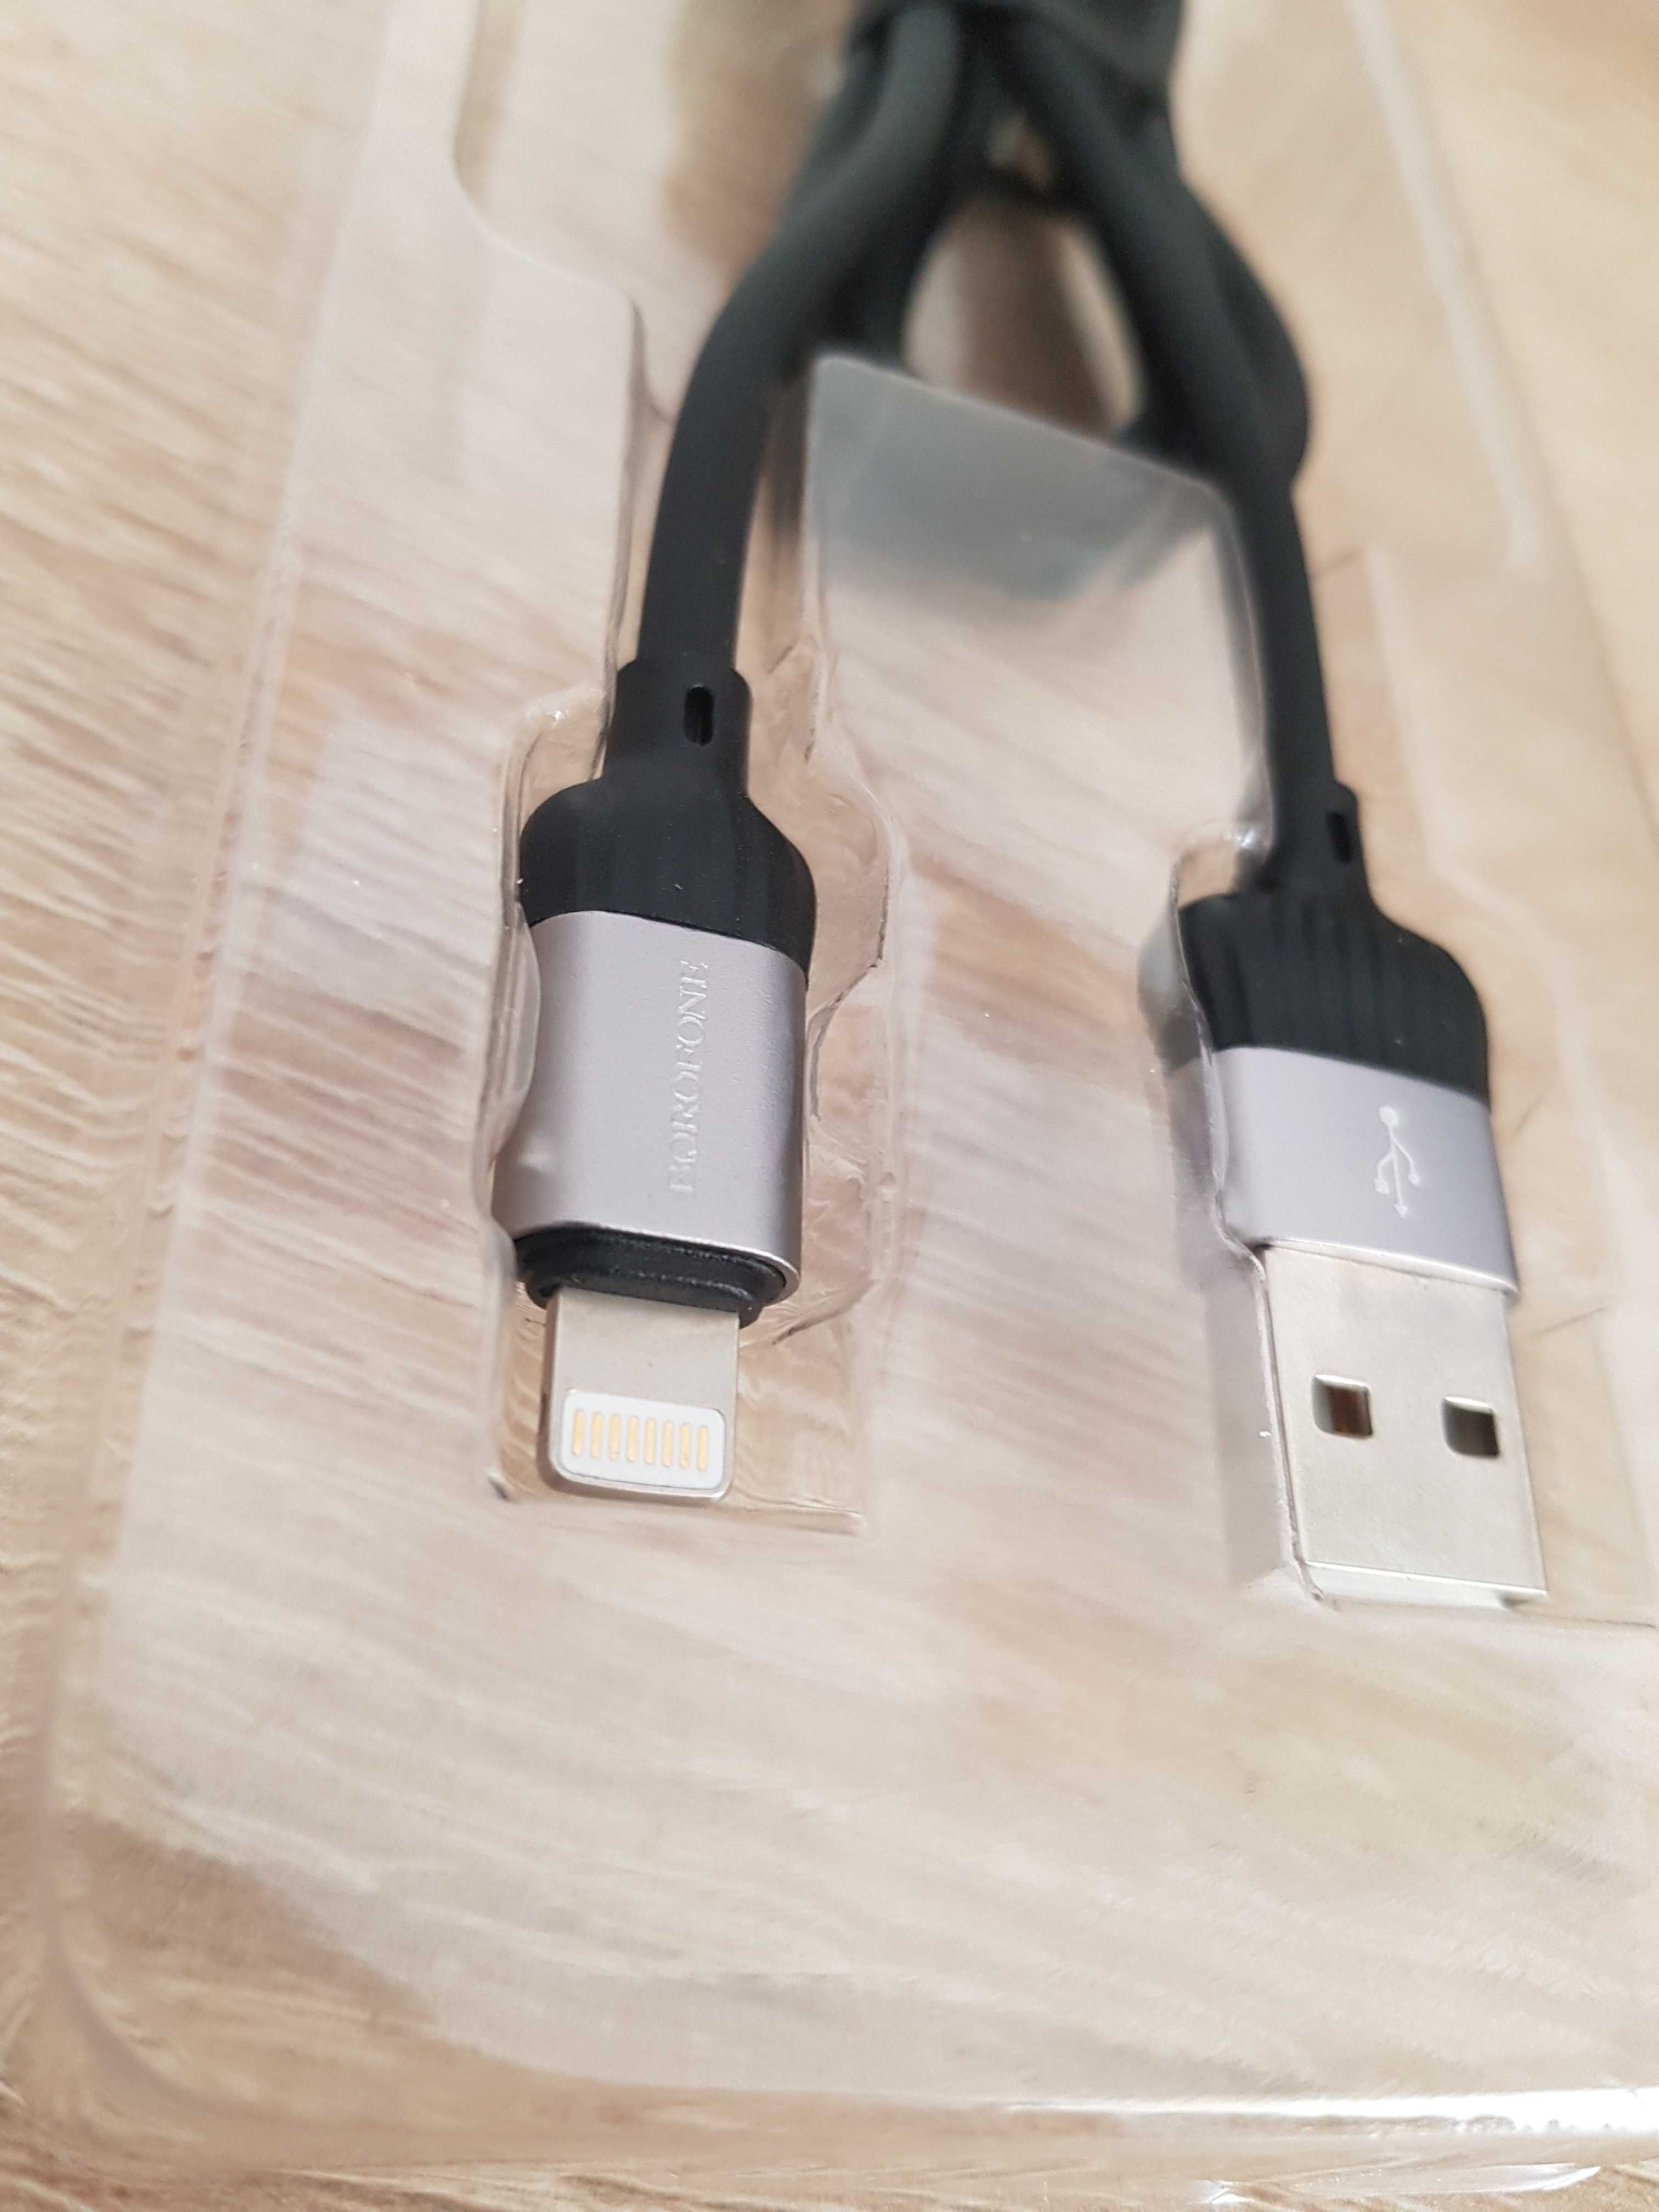 Kabel BX28 Dignity - USB na Lightning - 2,4A 1 metr szary